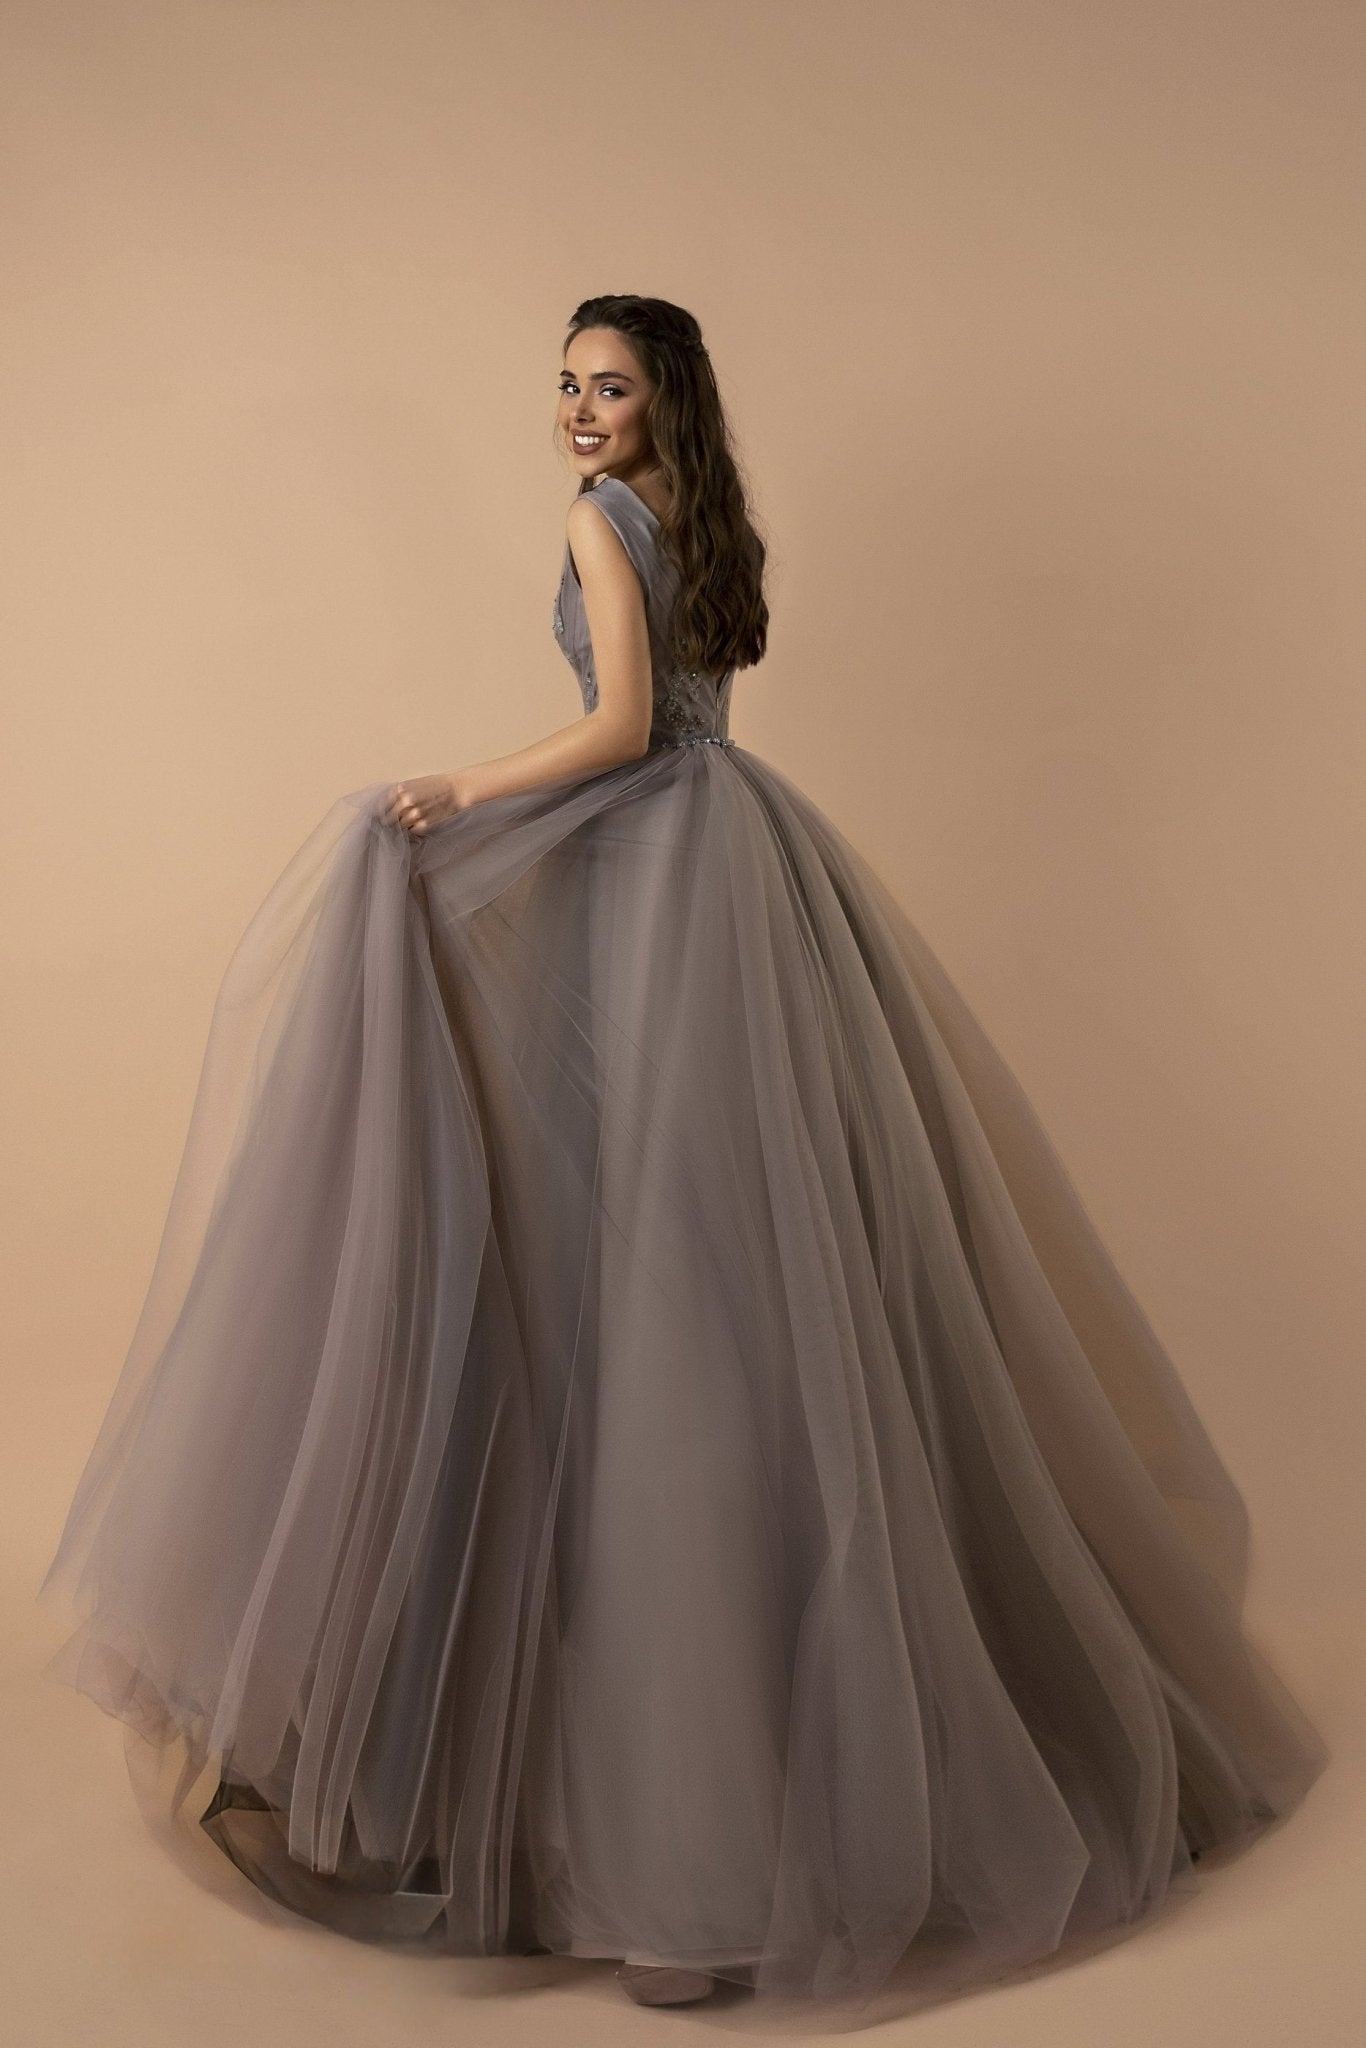 Elegant Embellished V-Neck Grey Tulle Gown with Cinched Waist and Flowing Skirt - A Line Wedding Dress Plus Size - WonderlandByLilian